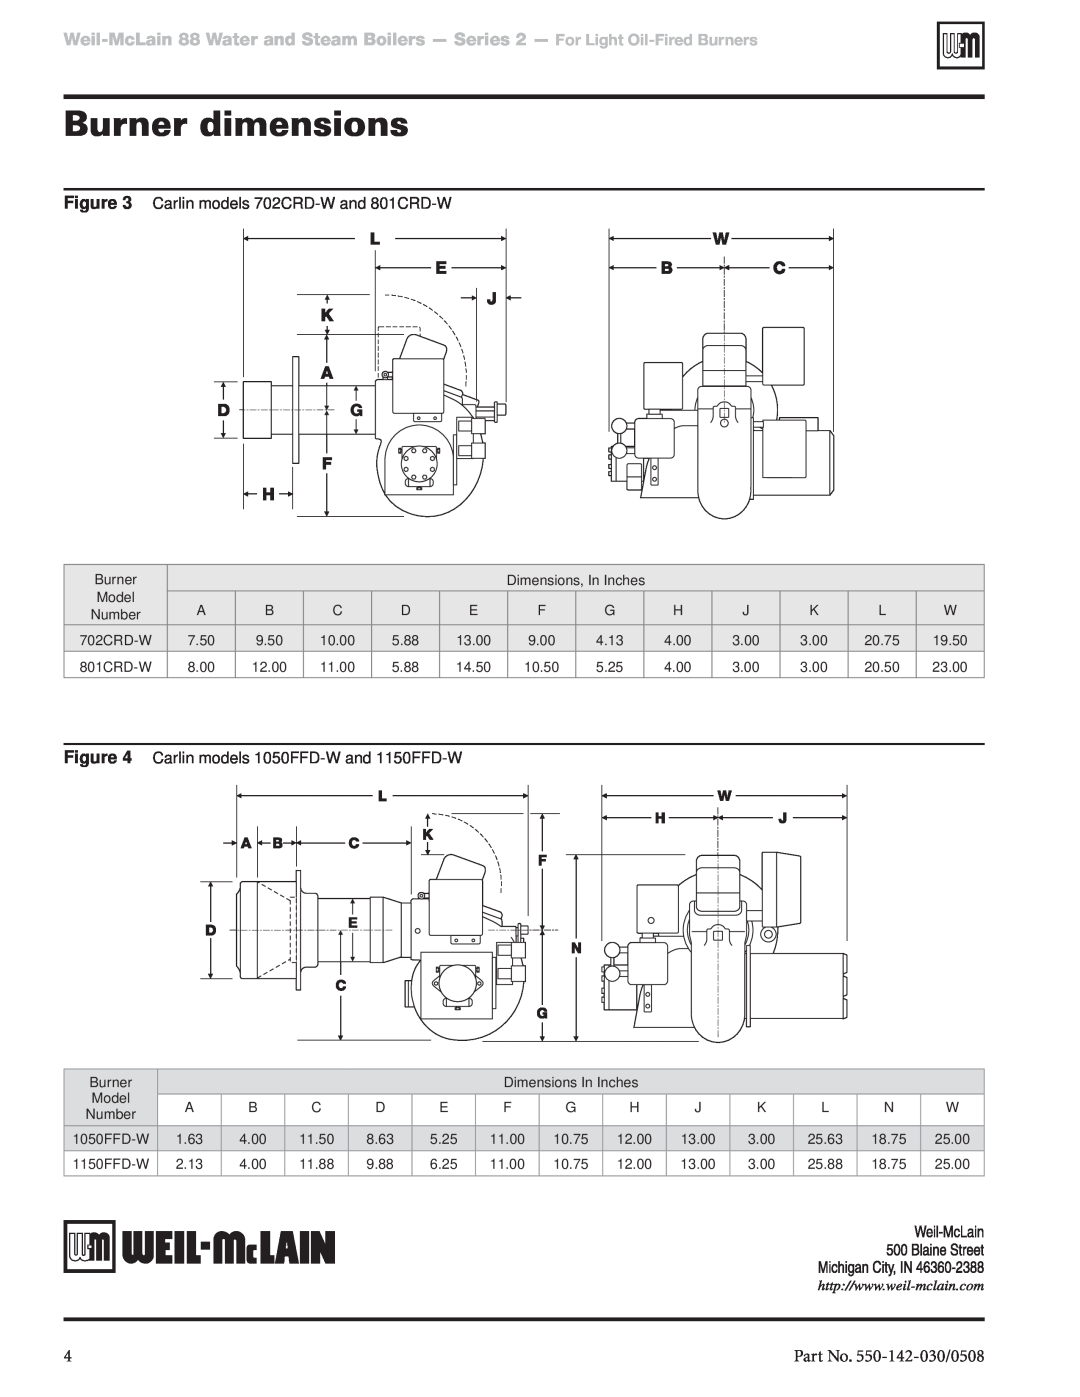 Weil-McLain 1050FFD-W, 1150FFD manual Burner dimensions, Part No. 550-142-030/0508, Carlin models 702CRD-Wand 801CRD-W 